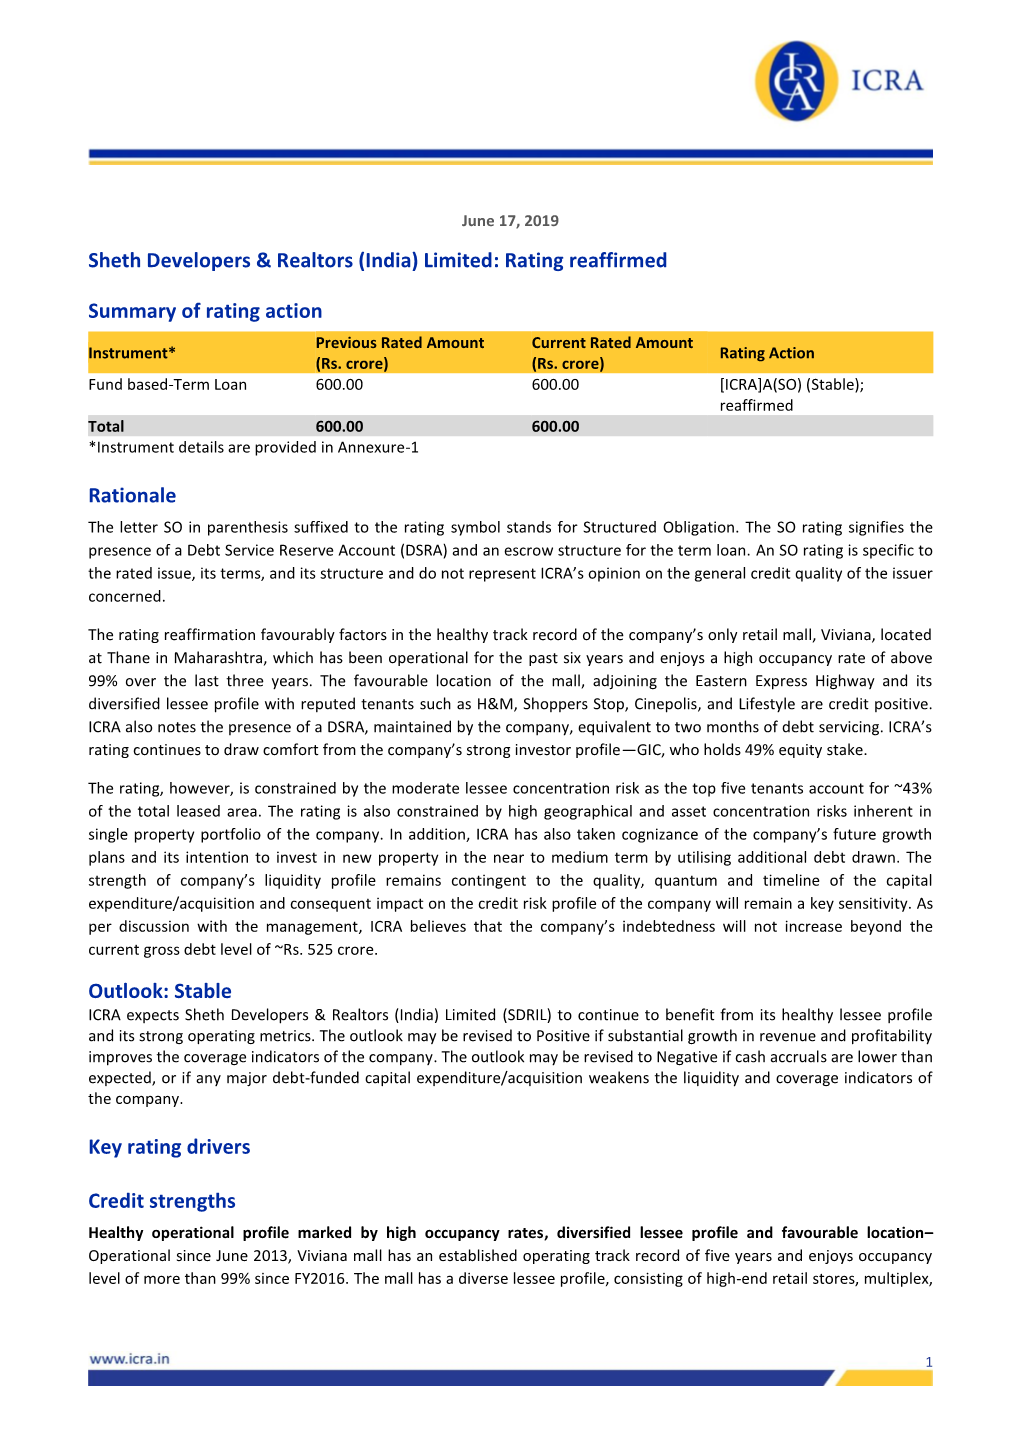 Sheth Developers & Realtors (India) Limited: Rating Reaffirmed Summary